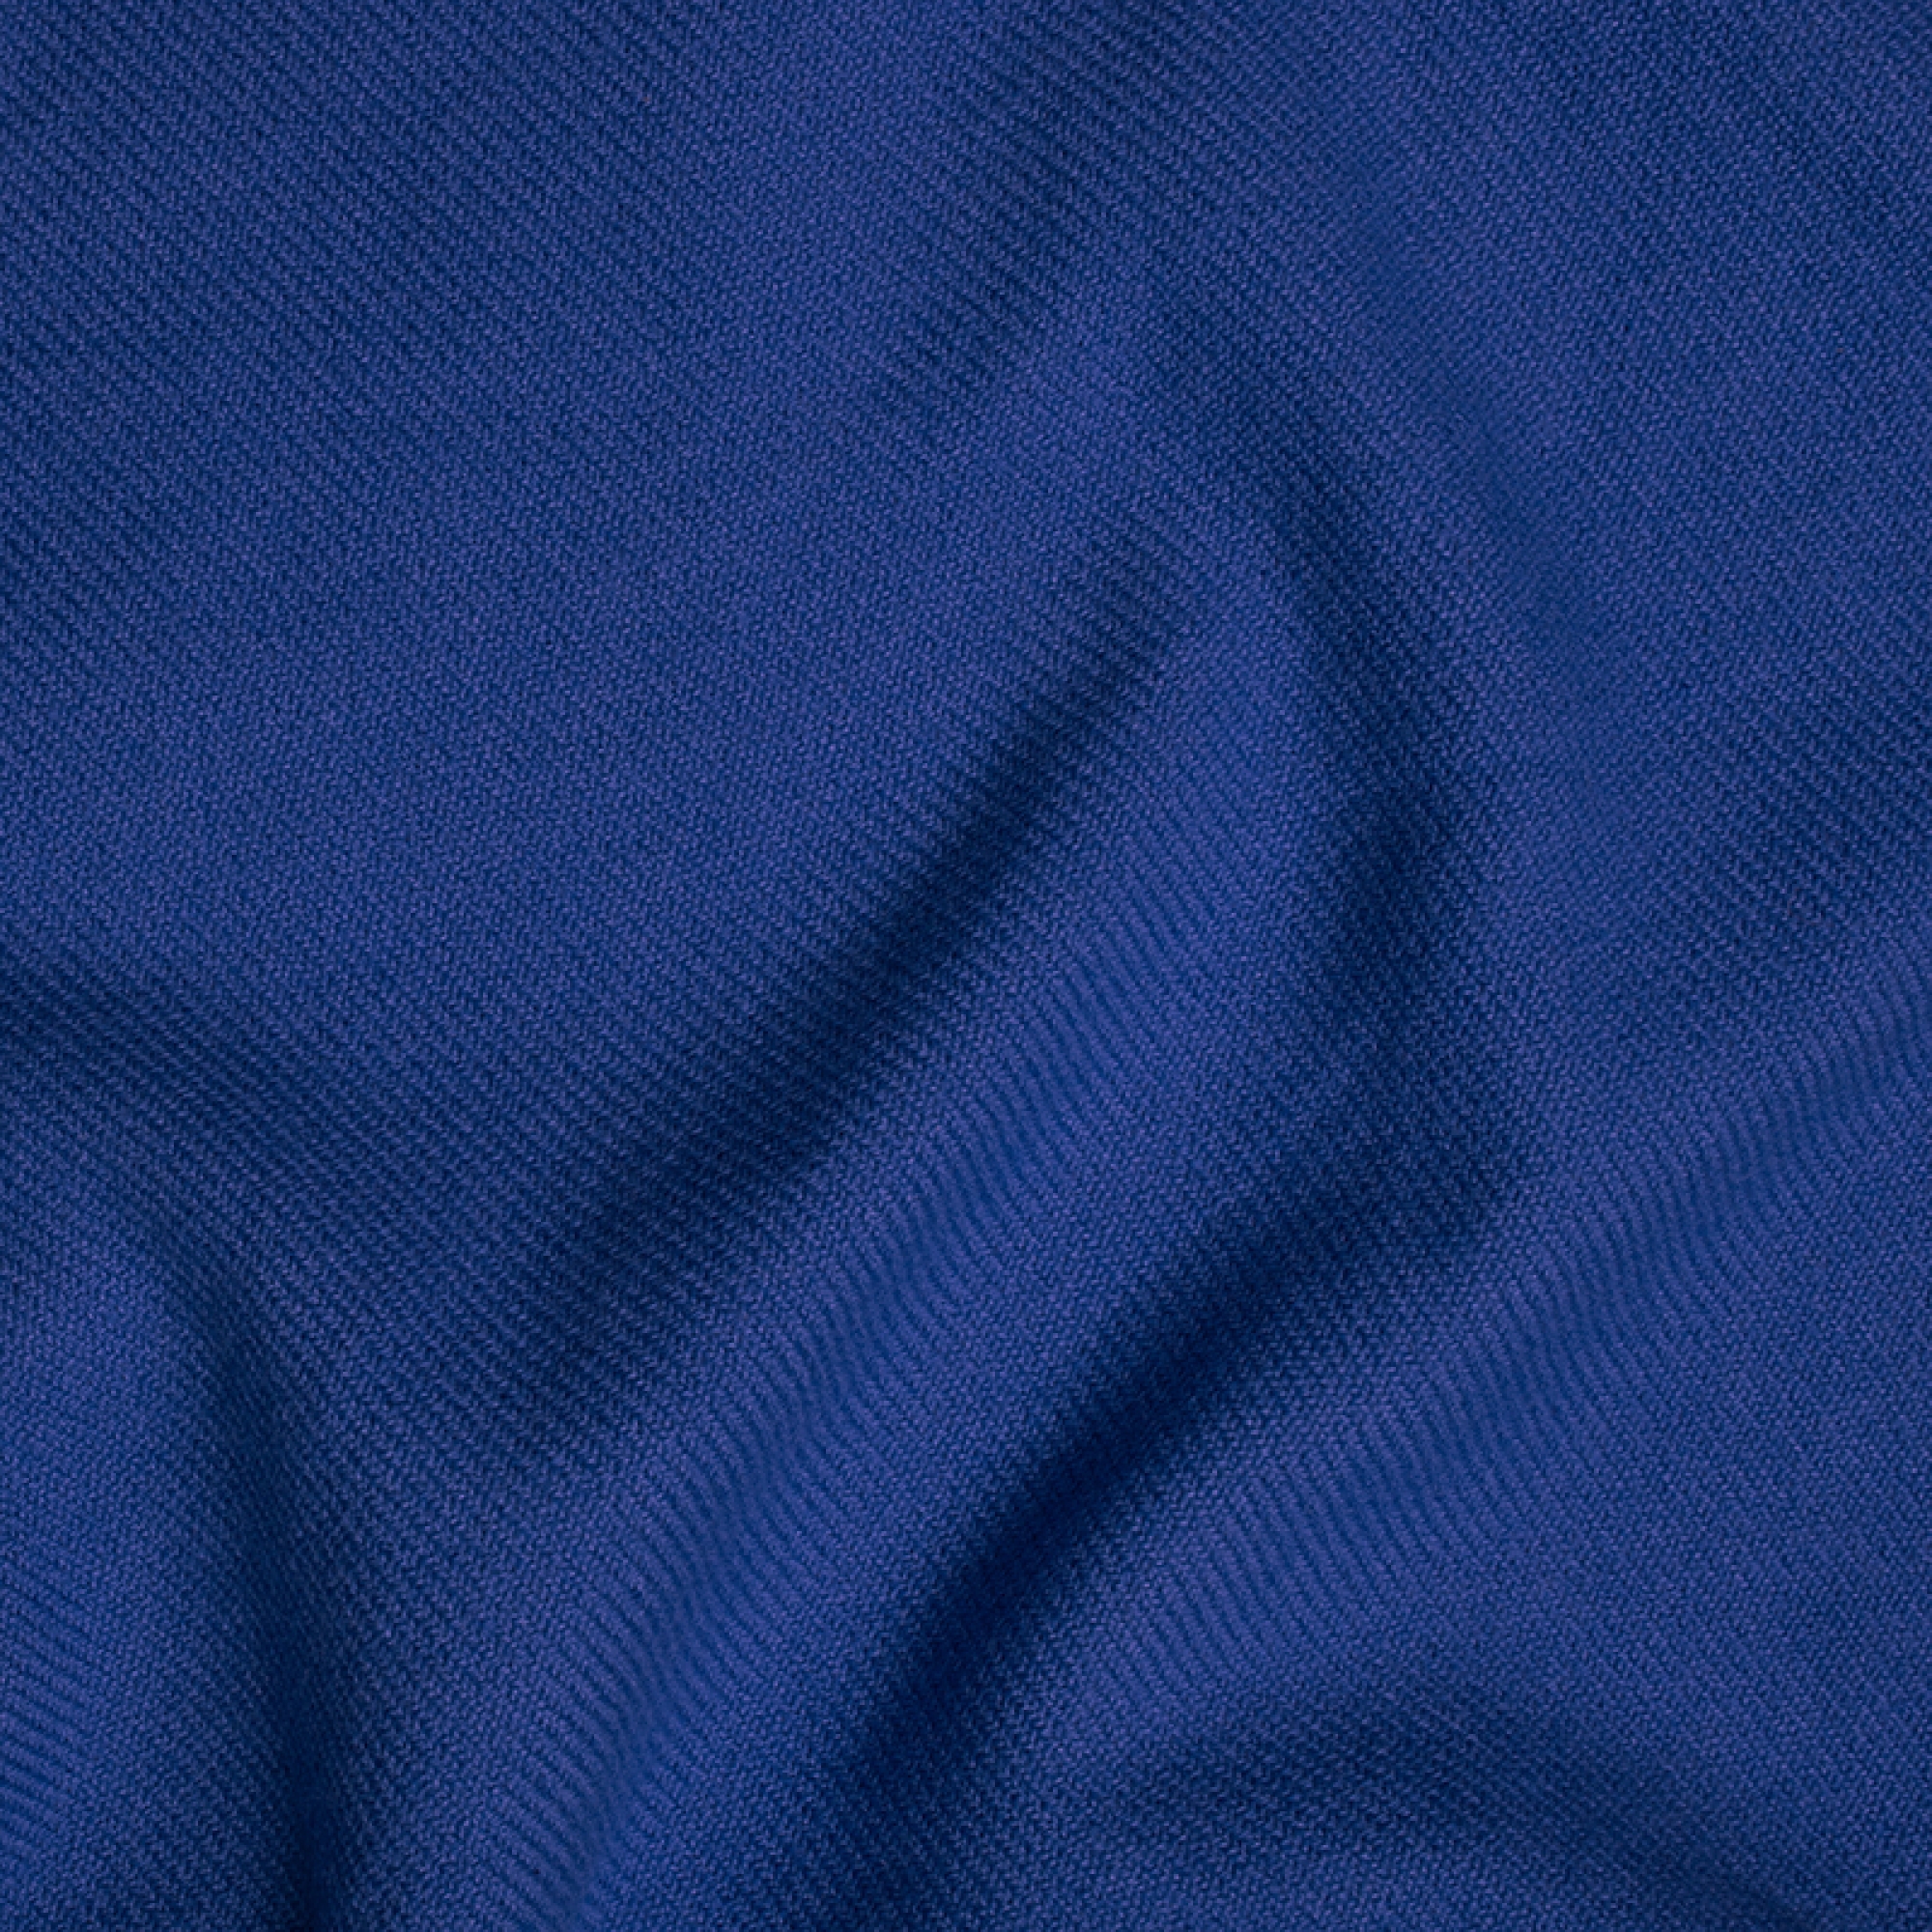 Cachemire pull homme toodoo plain l 220 x 220 bleuet 220x220cm